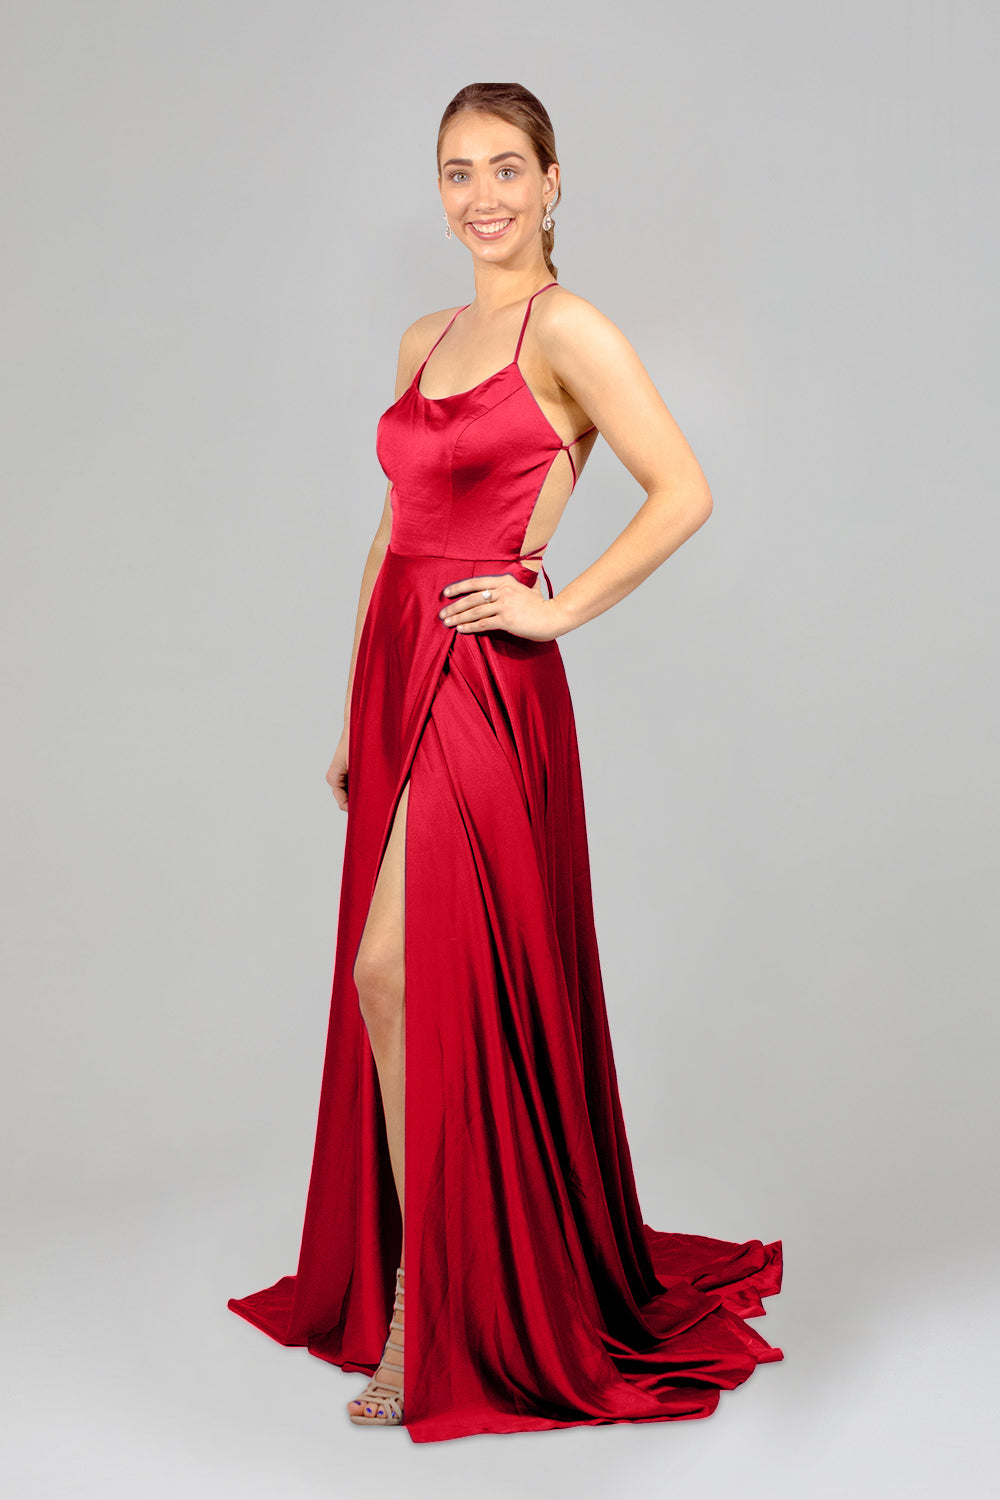 custom made red silk bridesmaid dresses australia perth envious bridal & formal